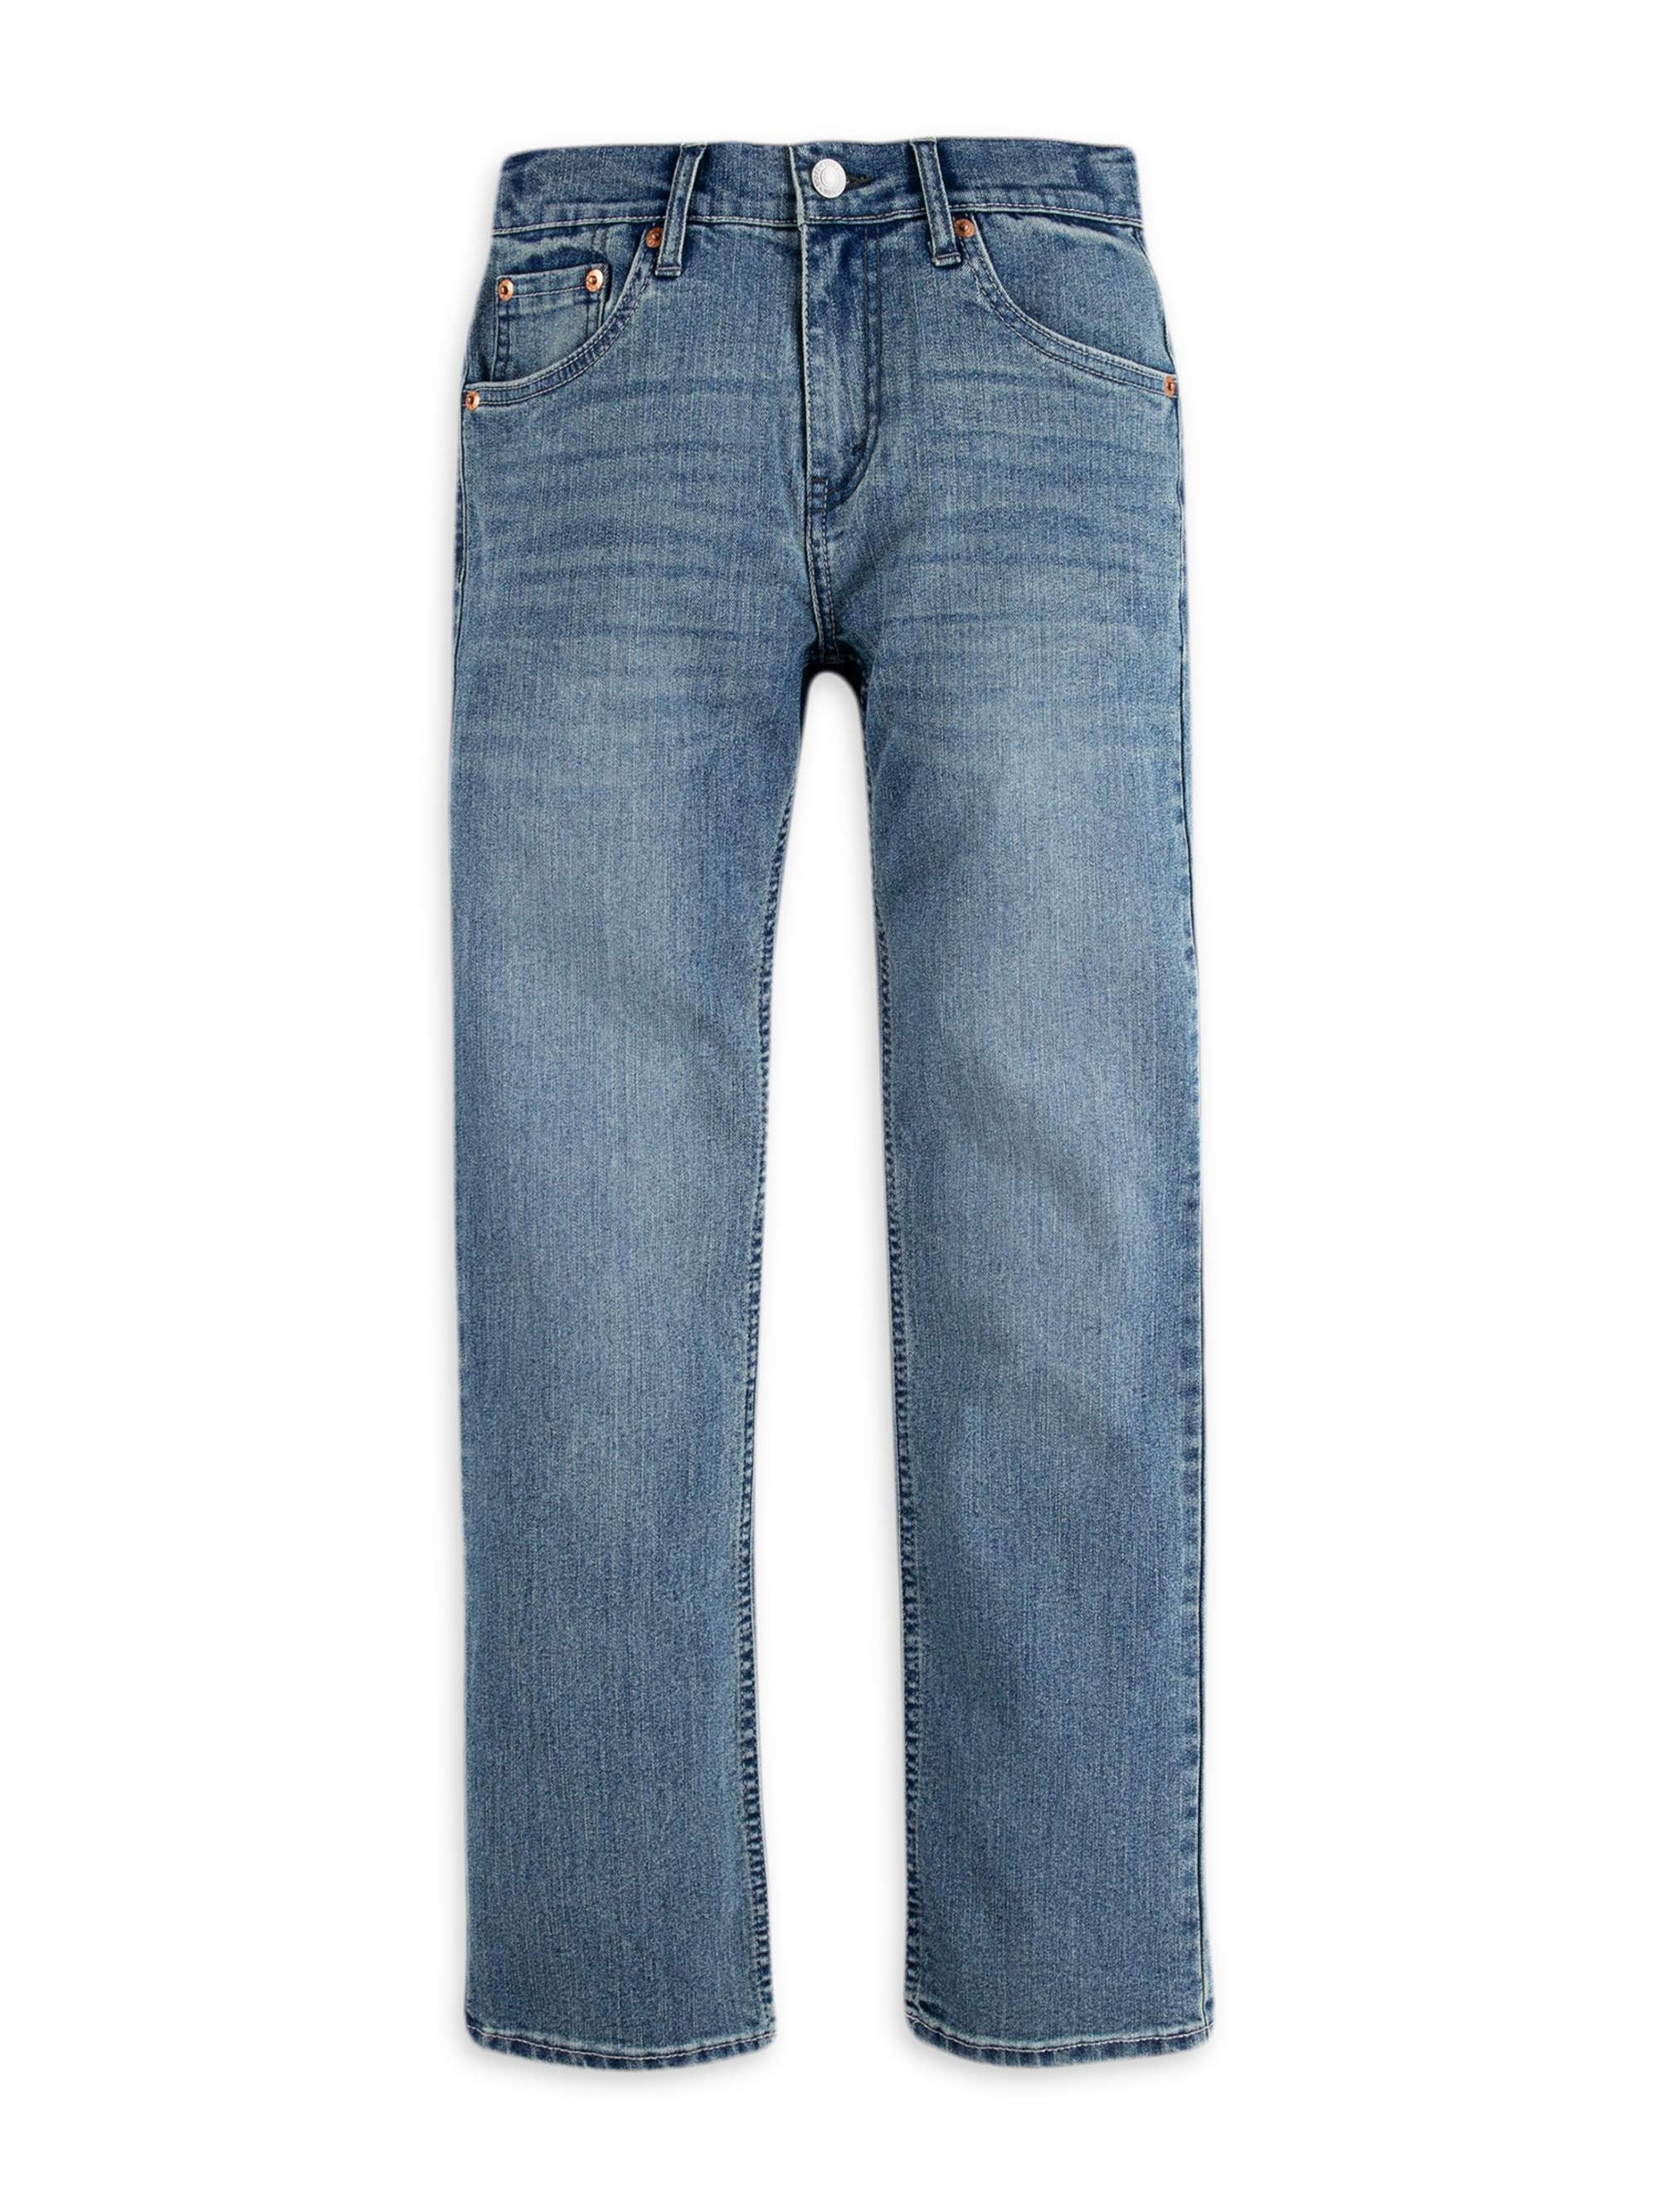 Levi's Boys' 514 Straight Fit Jeans, Sizes 4-20 